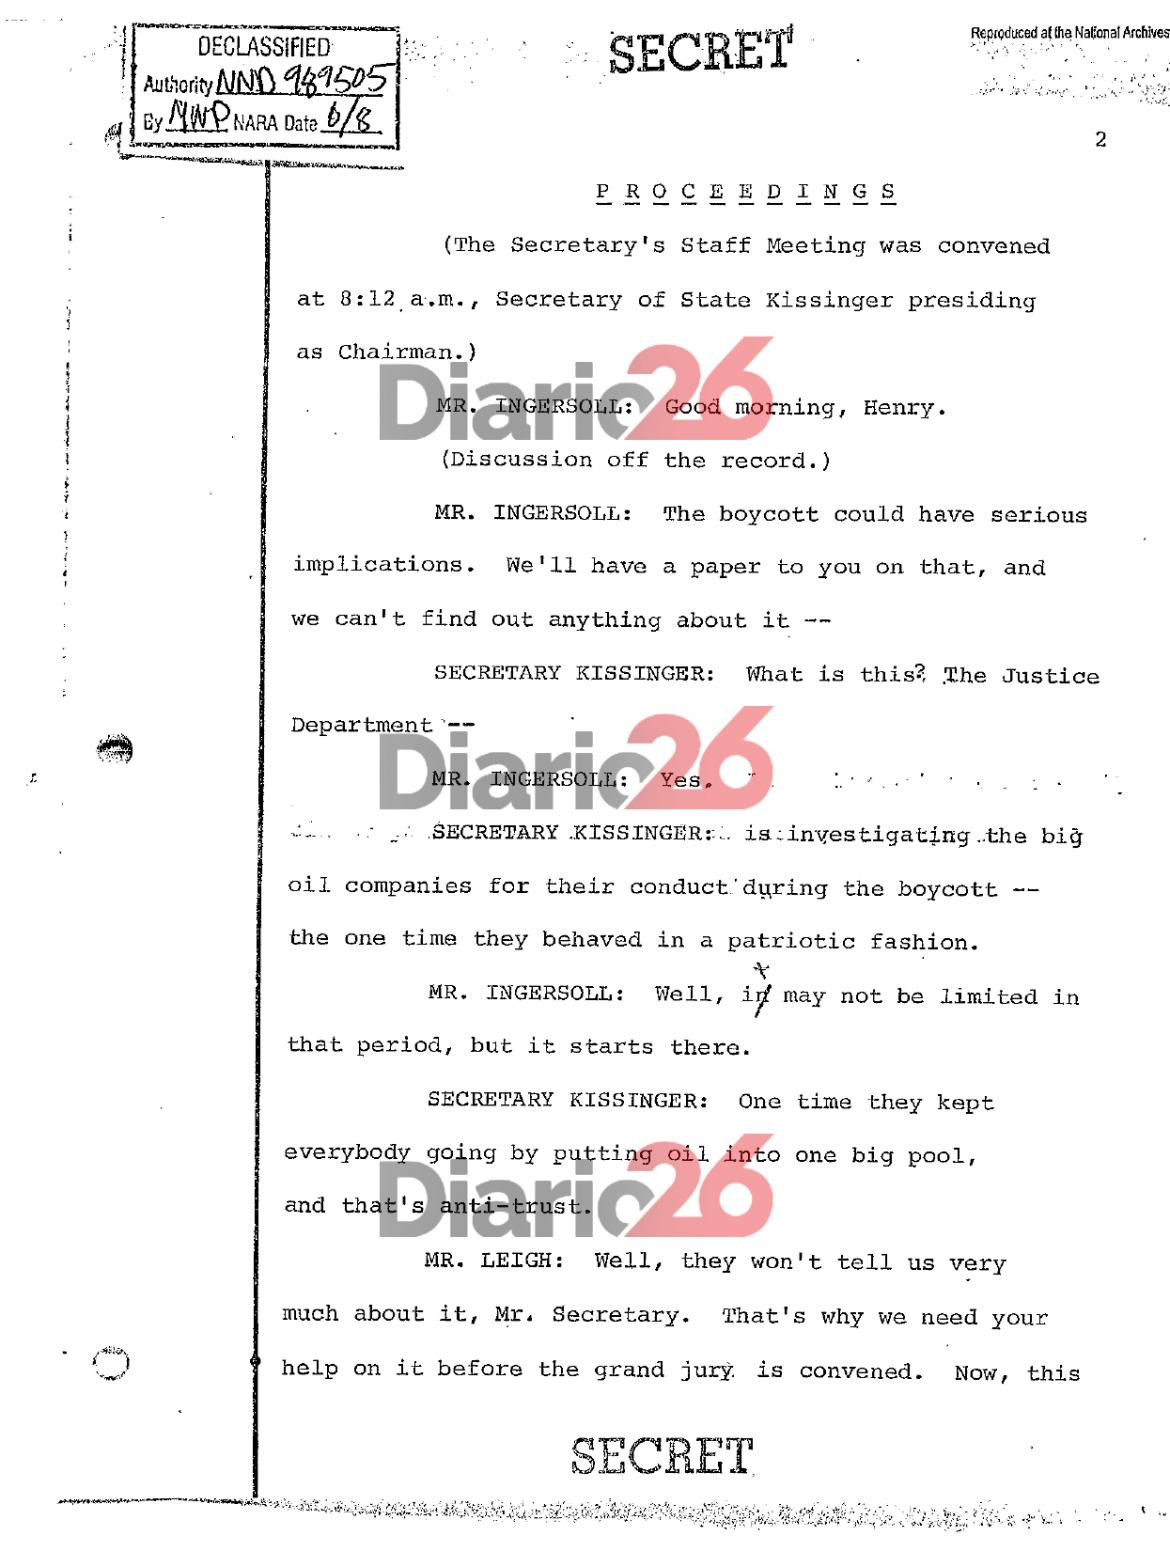 24 de marzo de 1976, golpe militar, dictadura militar en Argentina, documentos de Estados Unidos, Kissinger